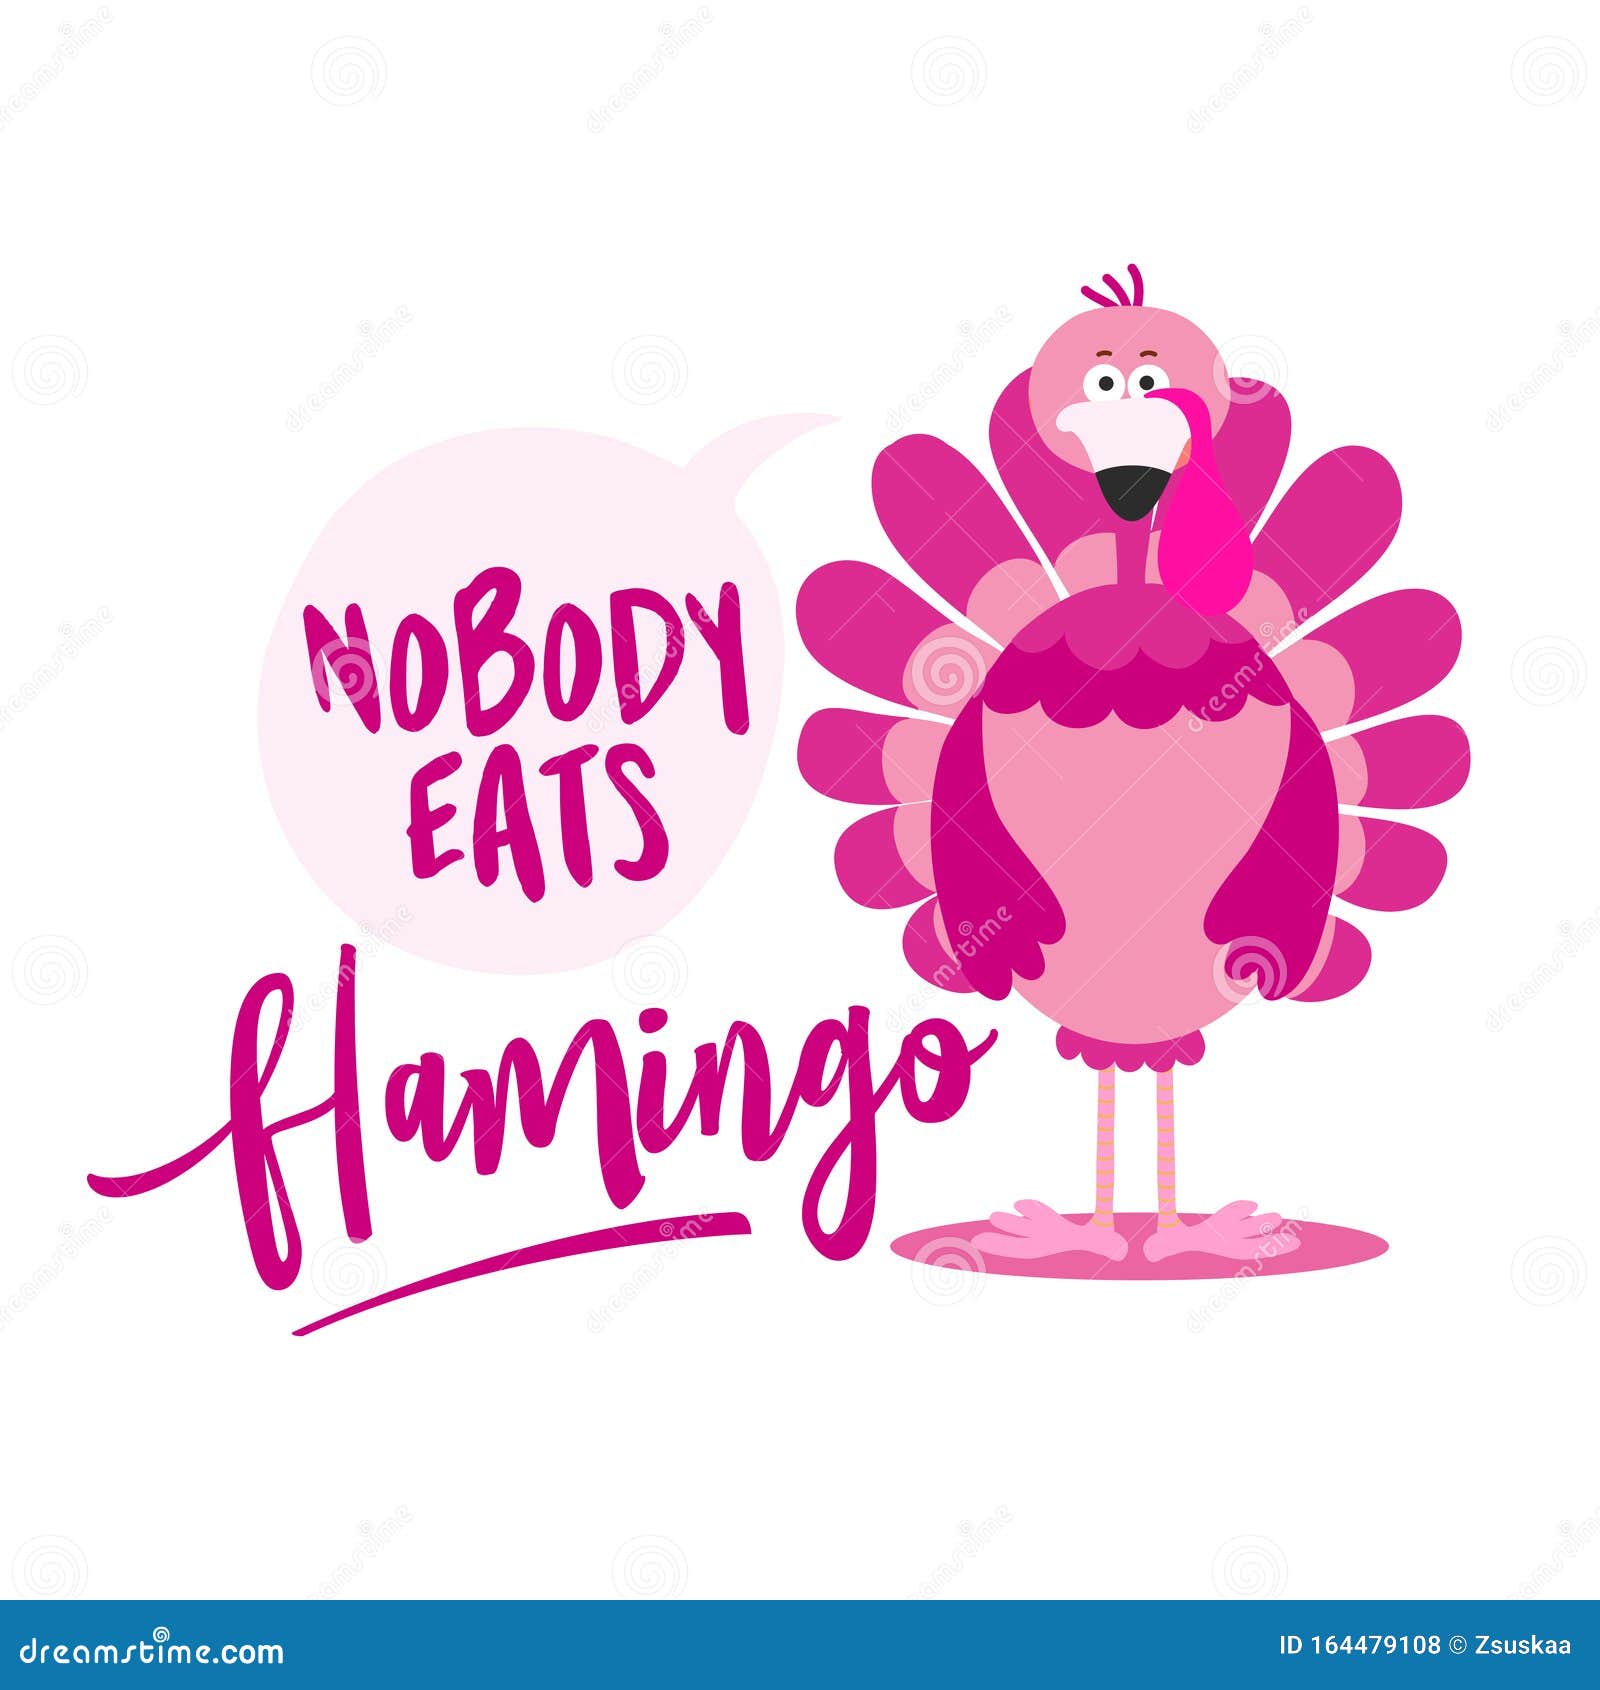 nobody eats flamingo - thanksgiving day calligraphic poster.